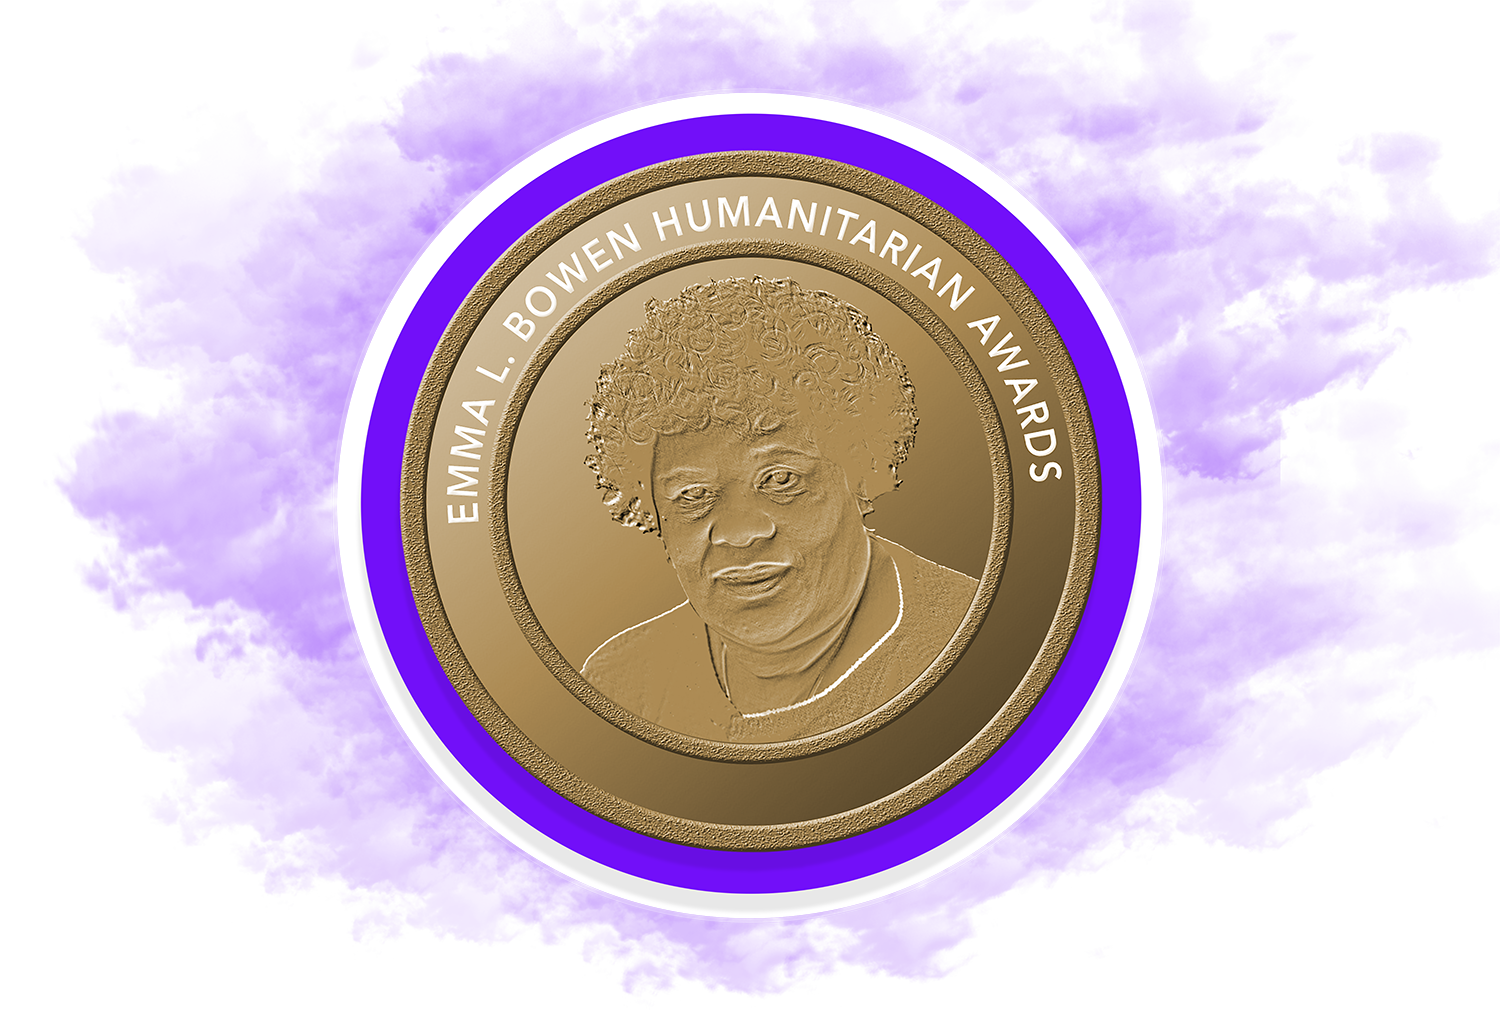 Humanitarian Awards medal